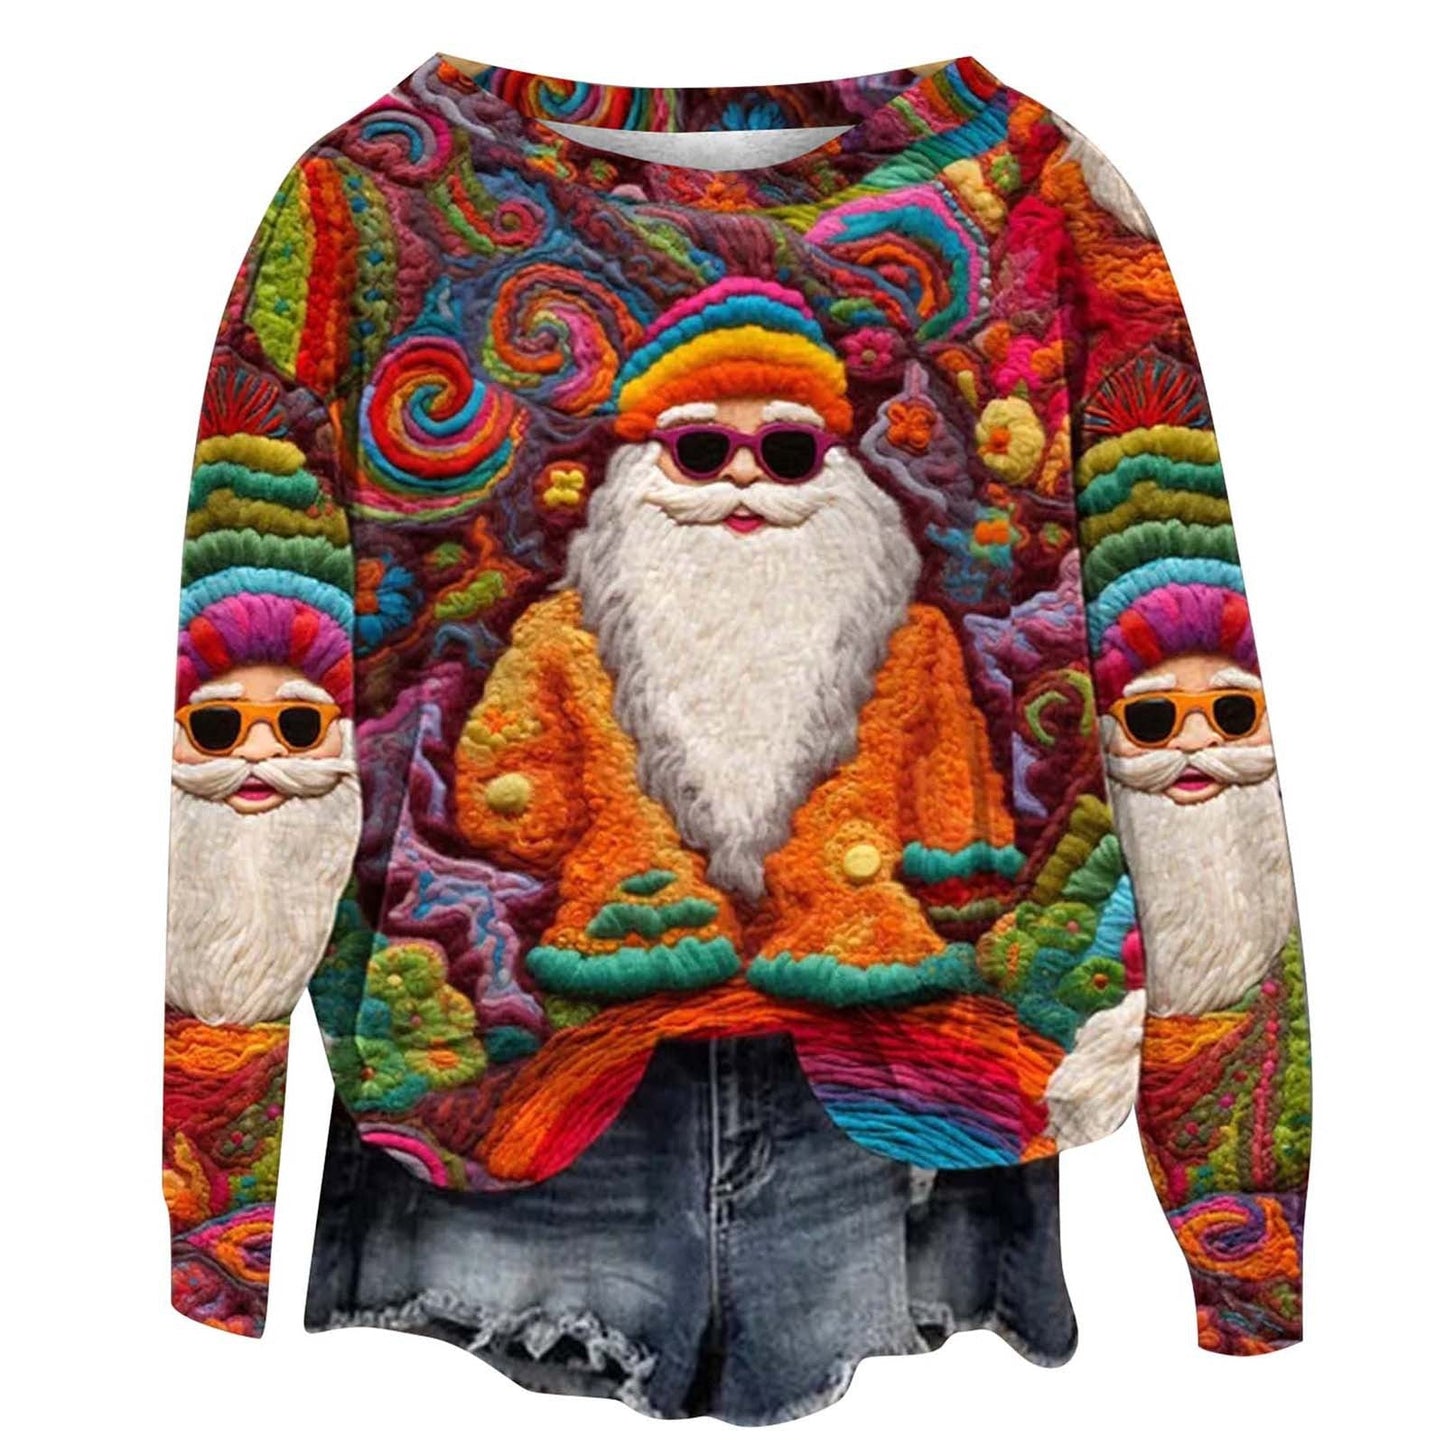 Festive sweater